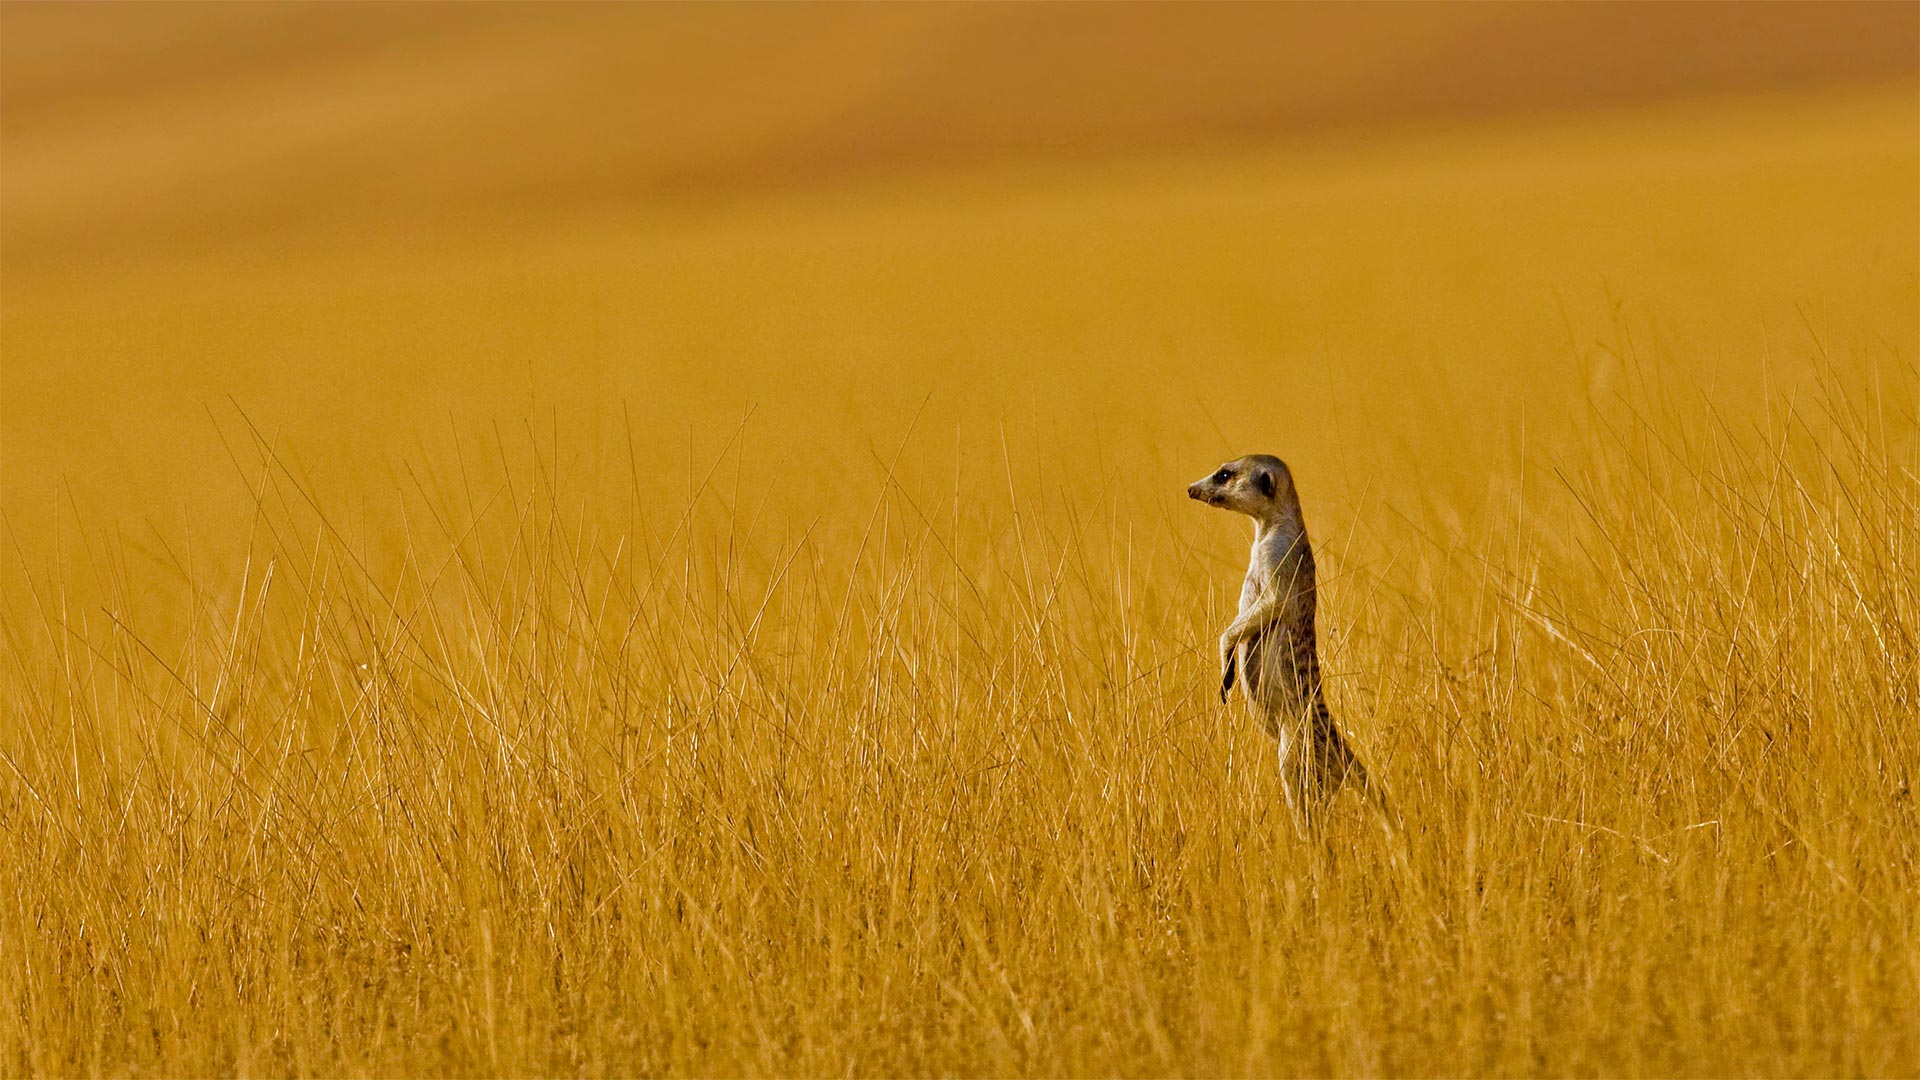 A meerkat in Namibia - Danita Delimont/Offset by Shutterstock)